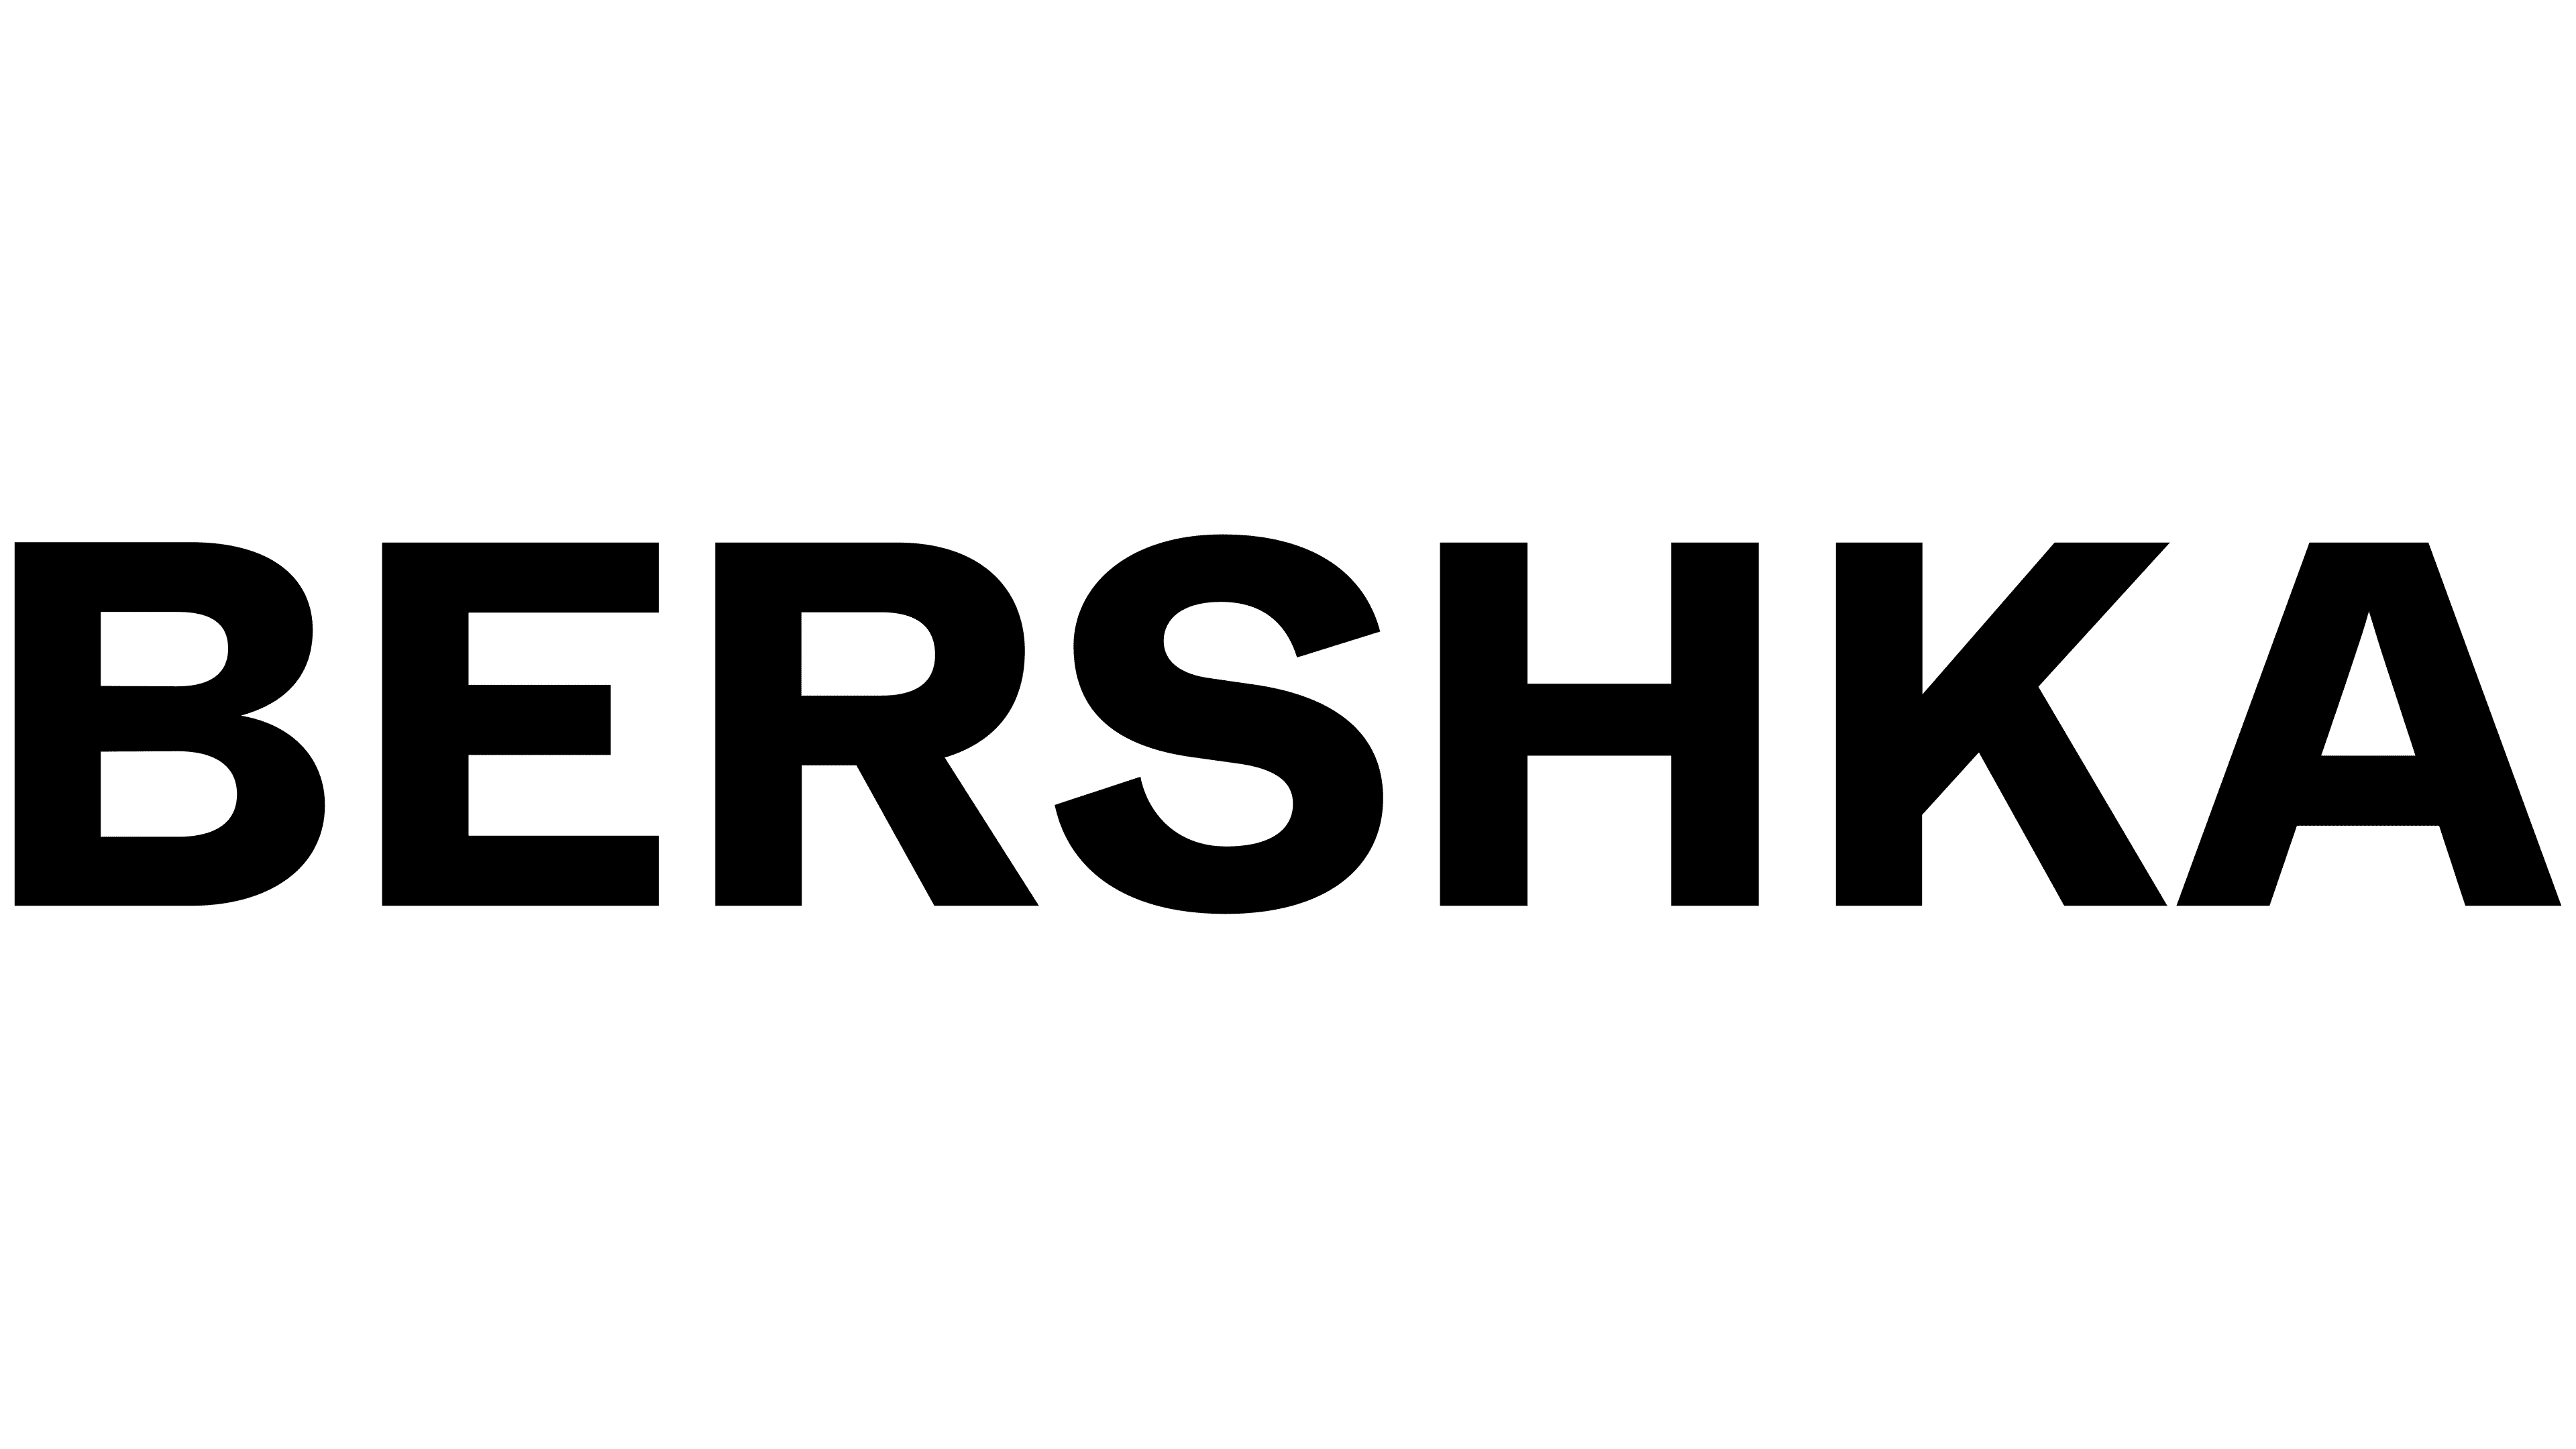 whisky Hykler ankel Bershka Logo, symbol, meaning, history, PNG, brand